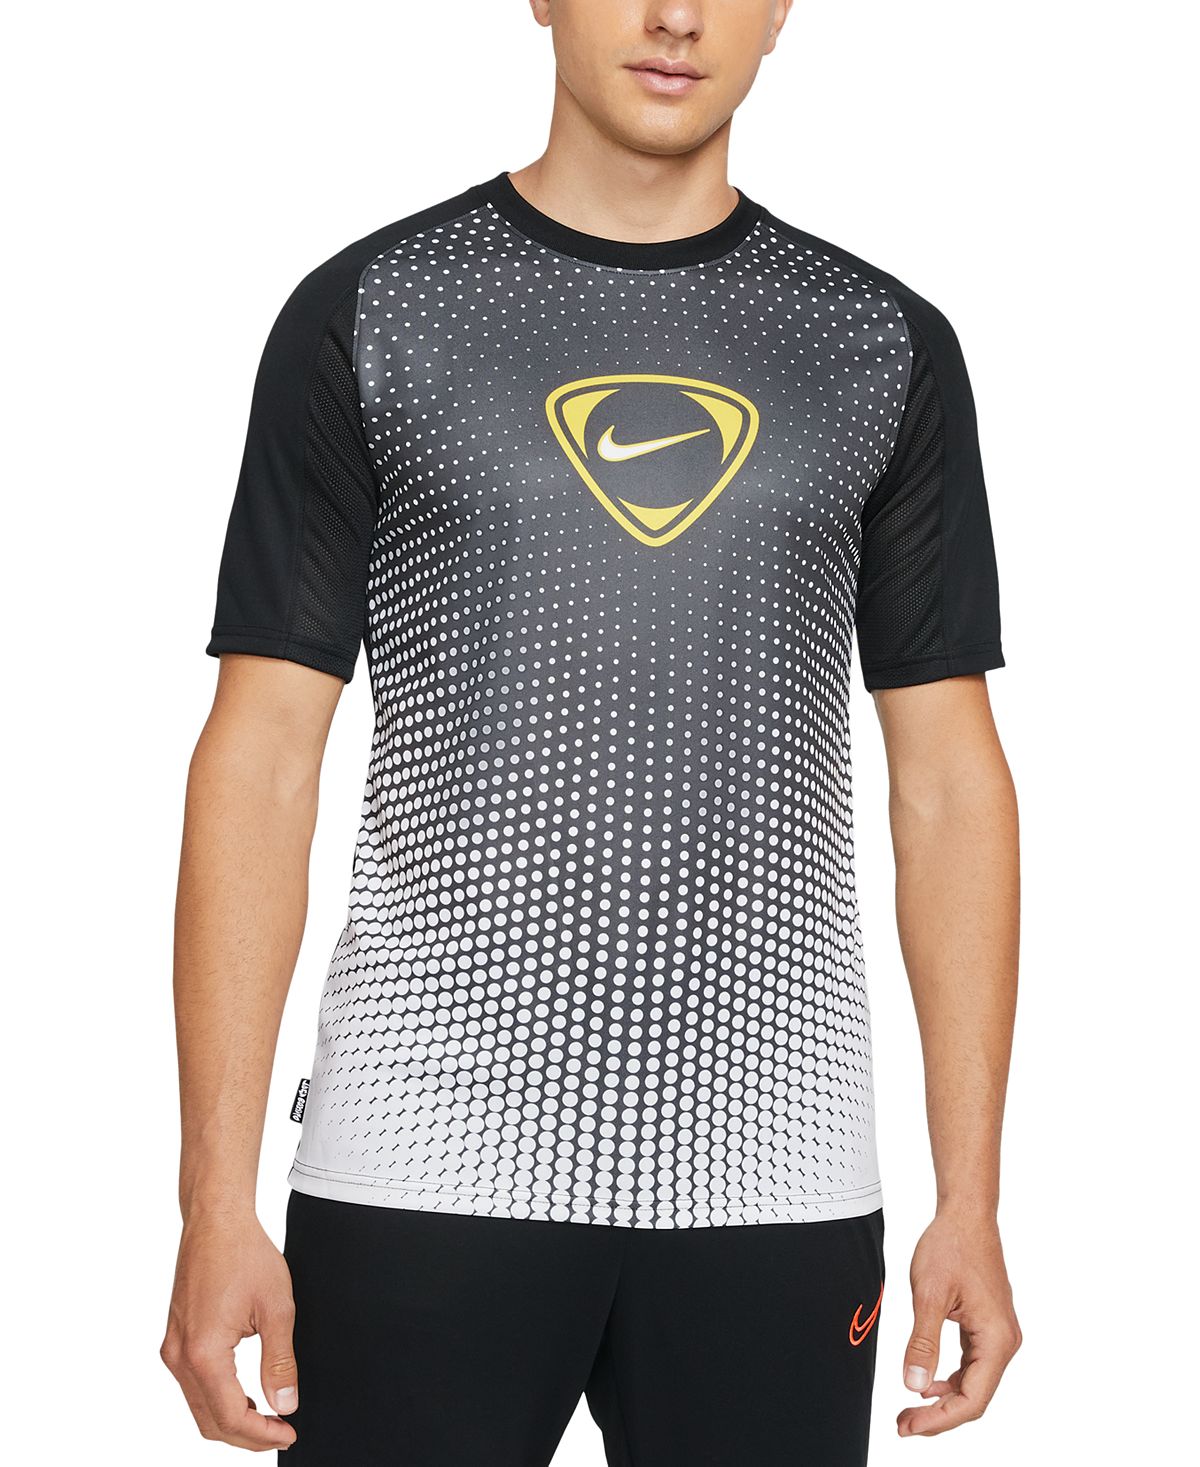 Nike Dri-fit Academy Soccer Shirt Black/White/Gold